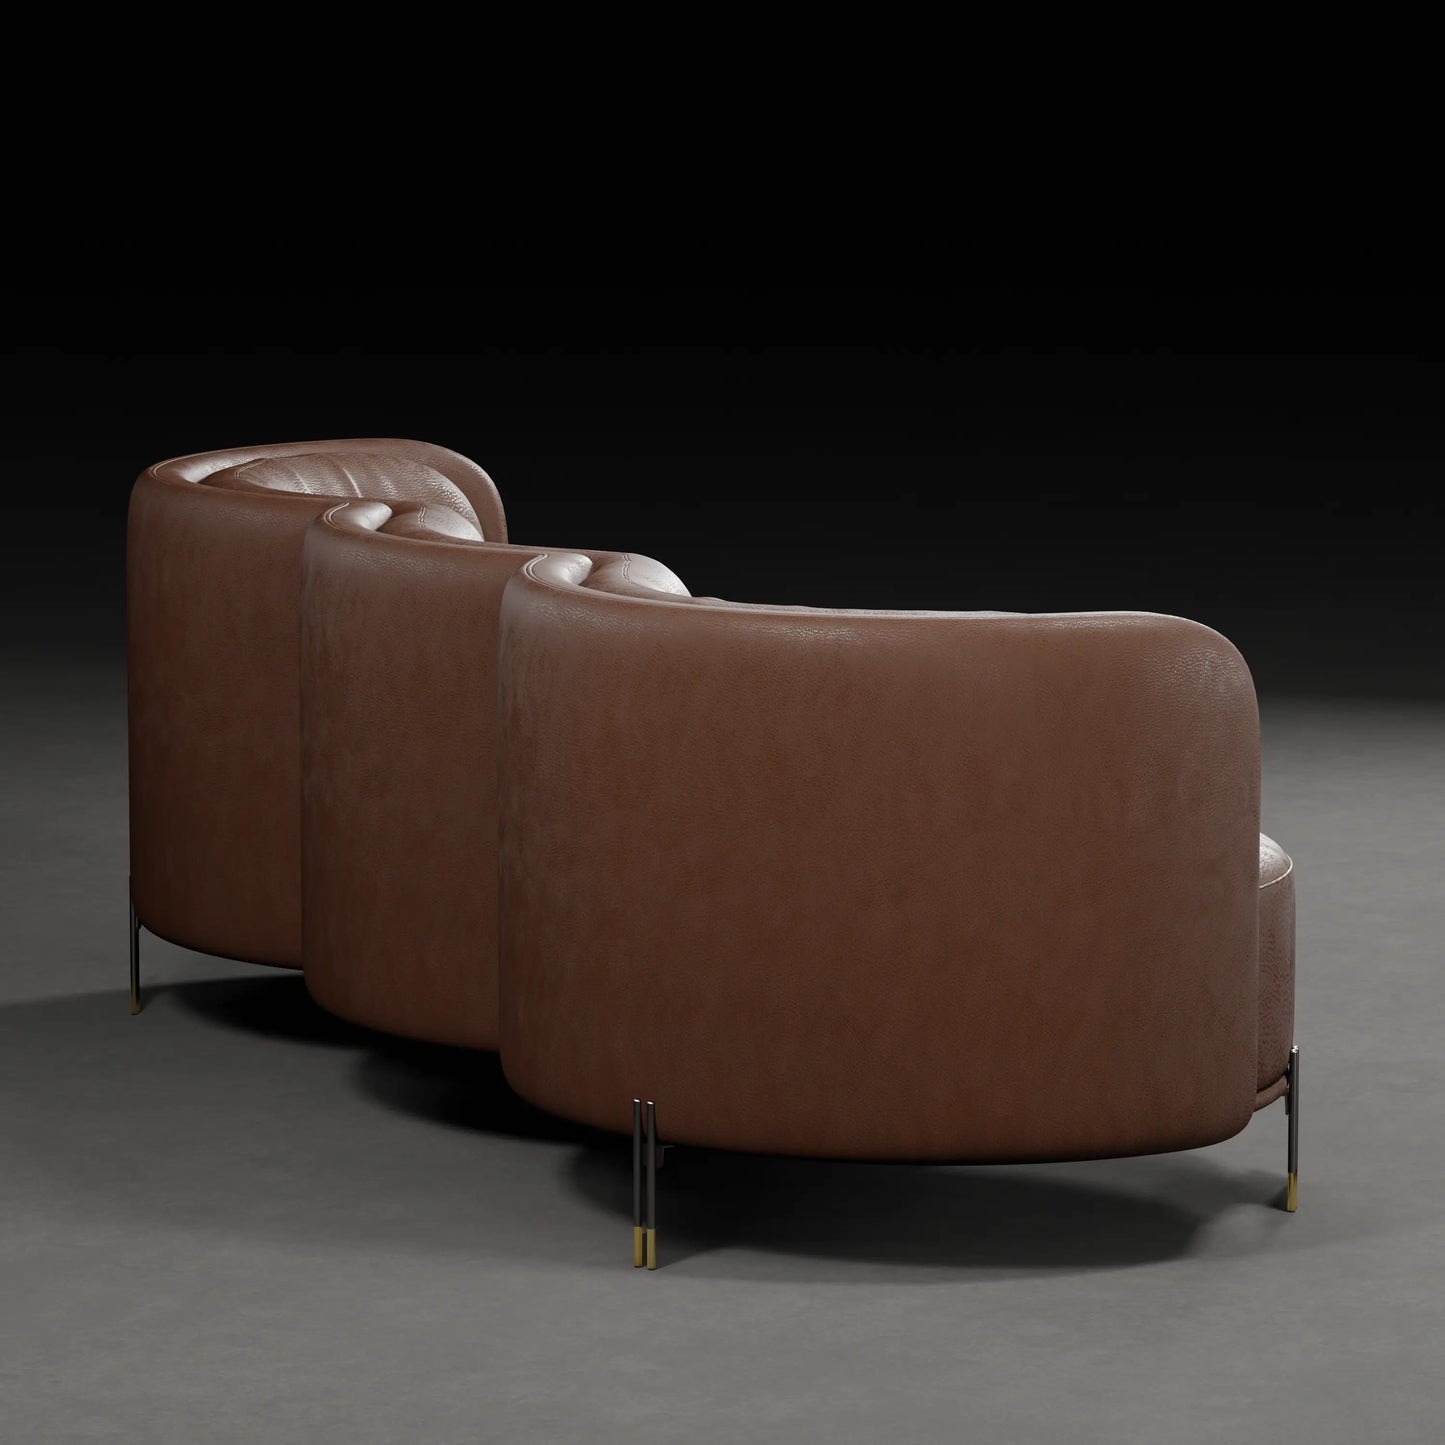 LOTUS -  3 Seater Premium Sofa in Leather Finish | Brown Colour